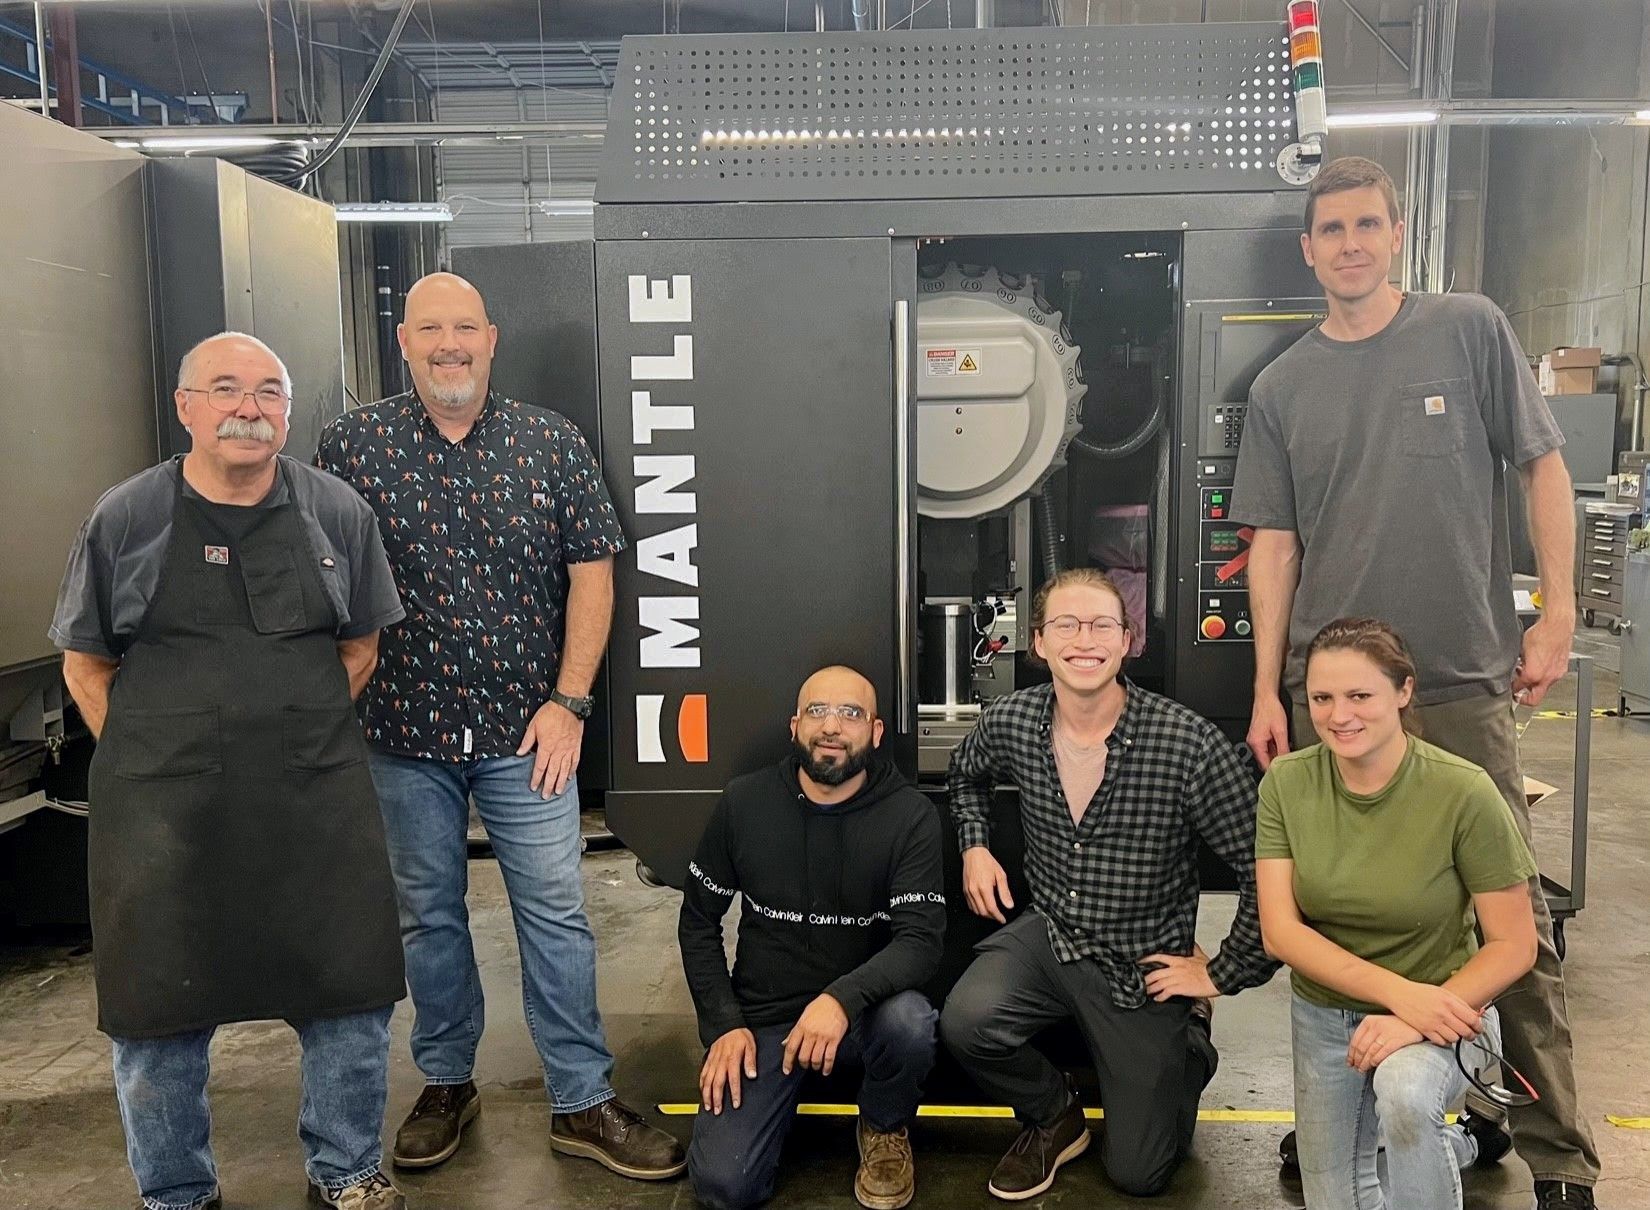 The Westec Plastics team standing next to their new 3D printer